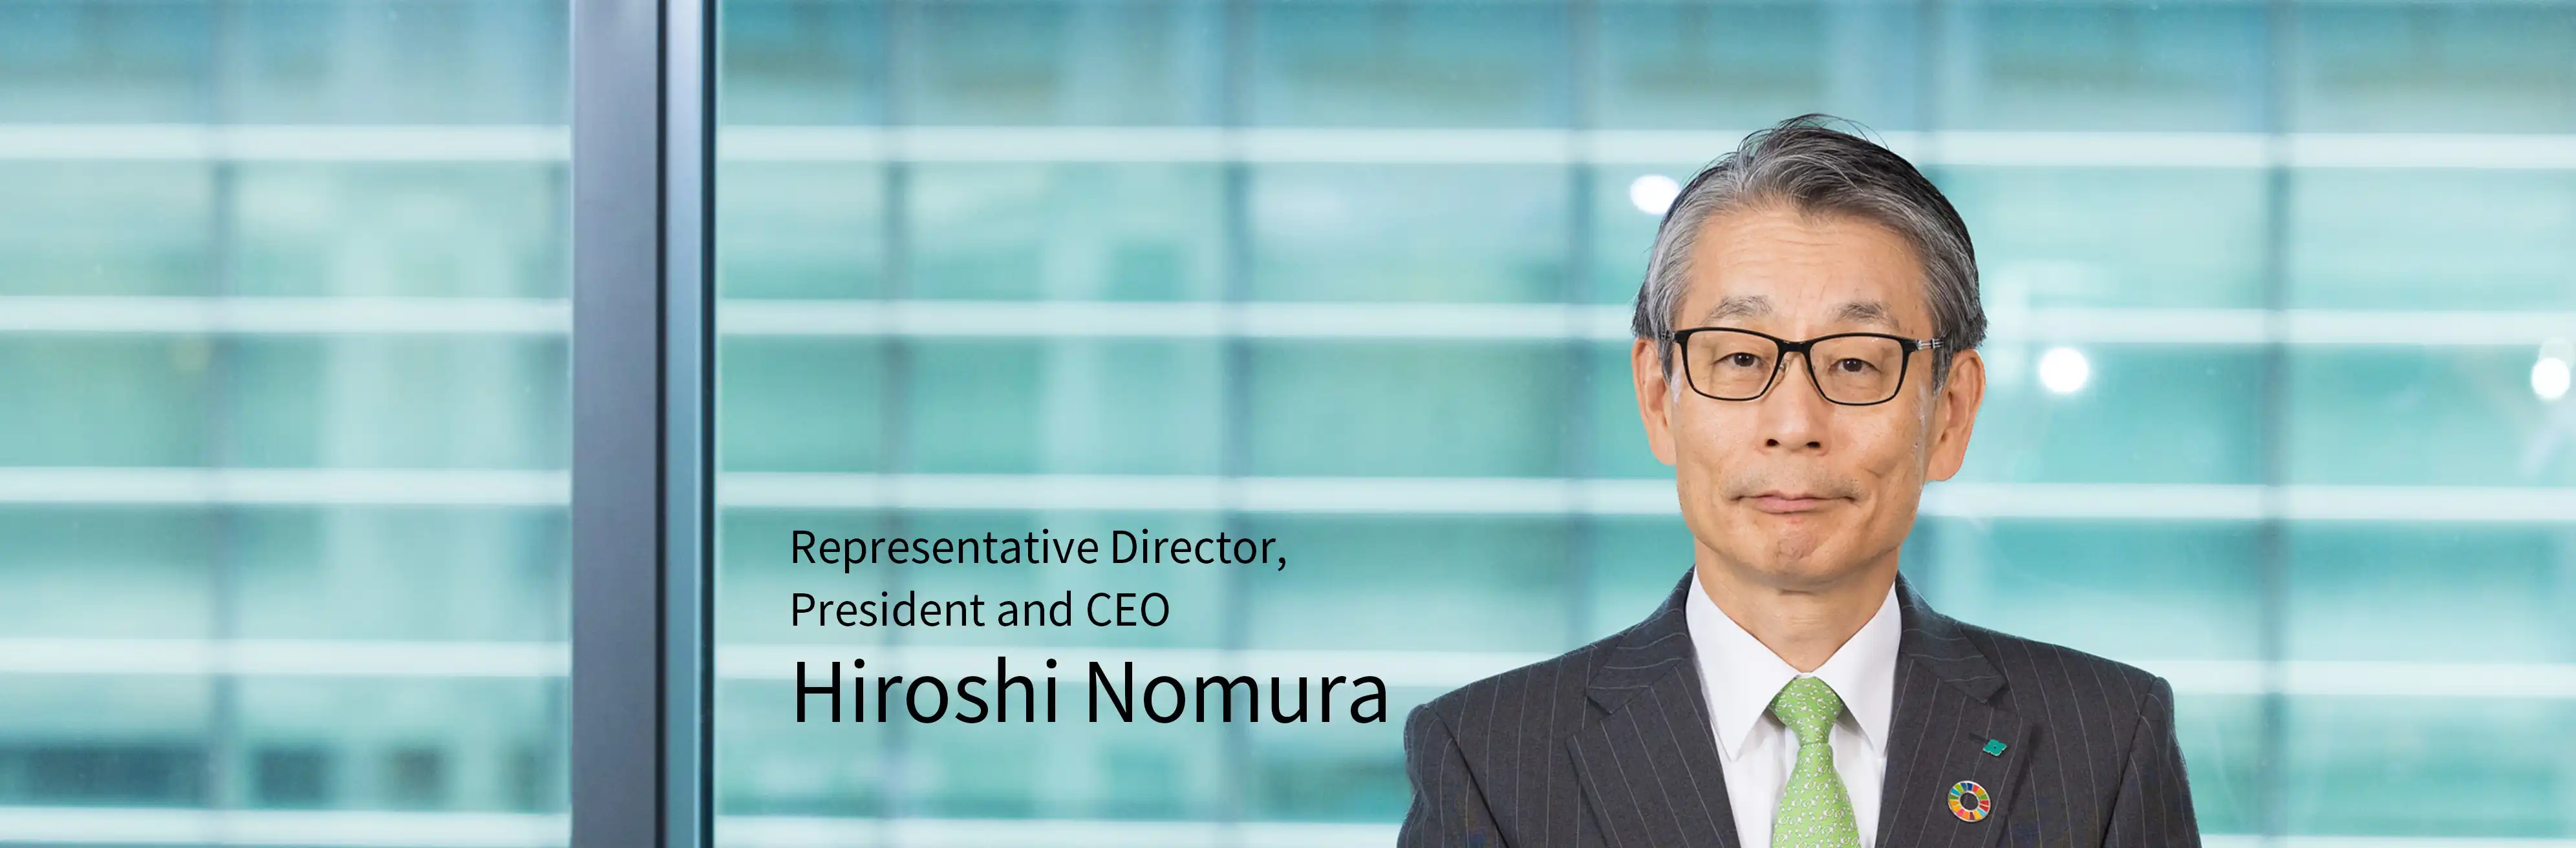 Hiroshi Nomura ,Representative Director, President and CEO